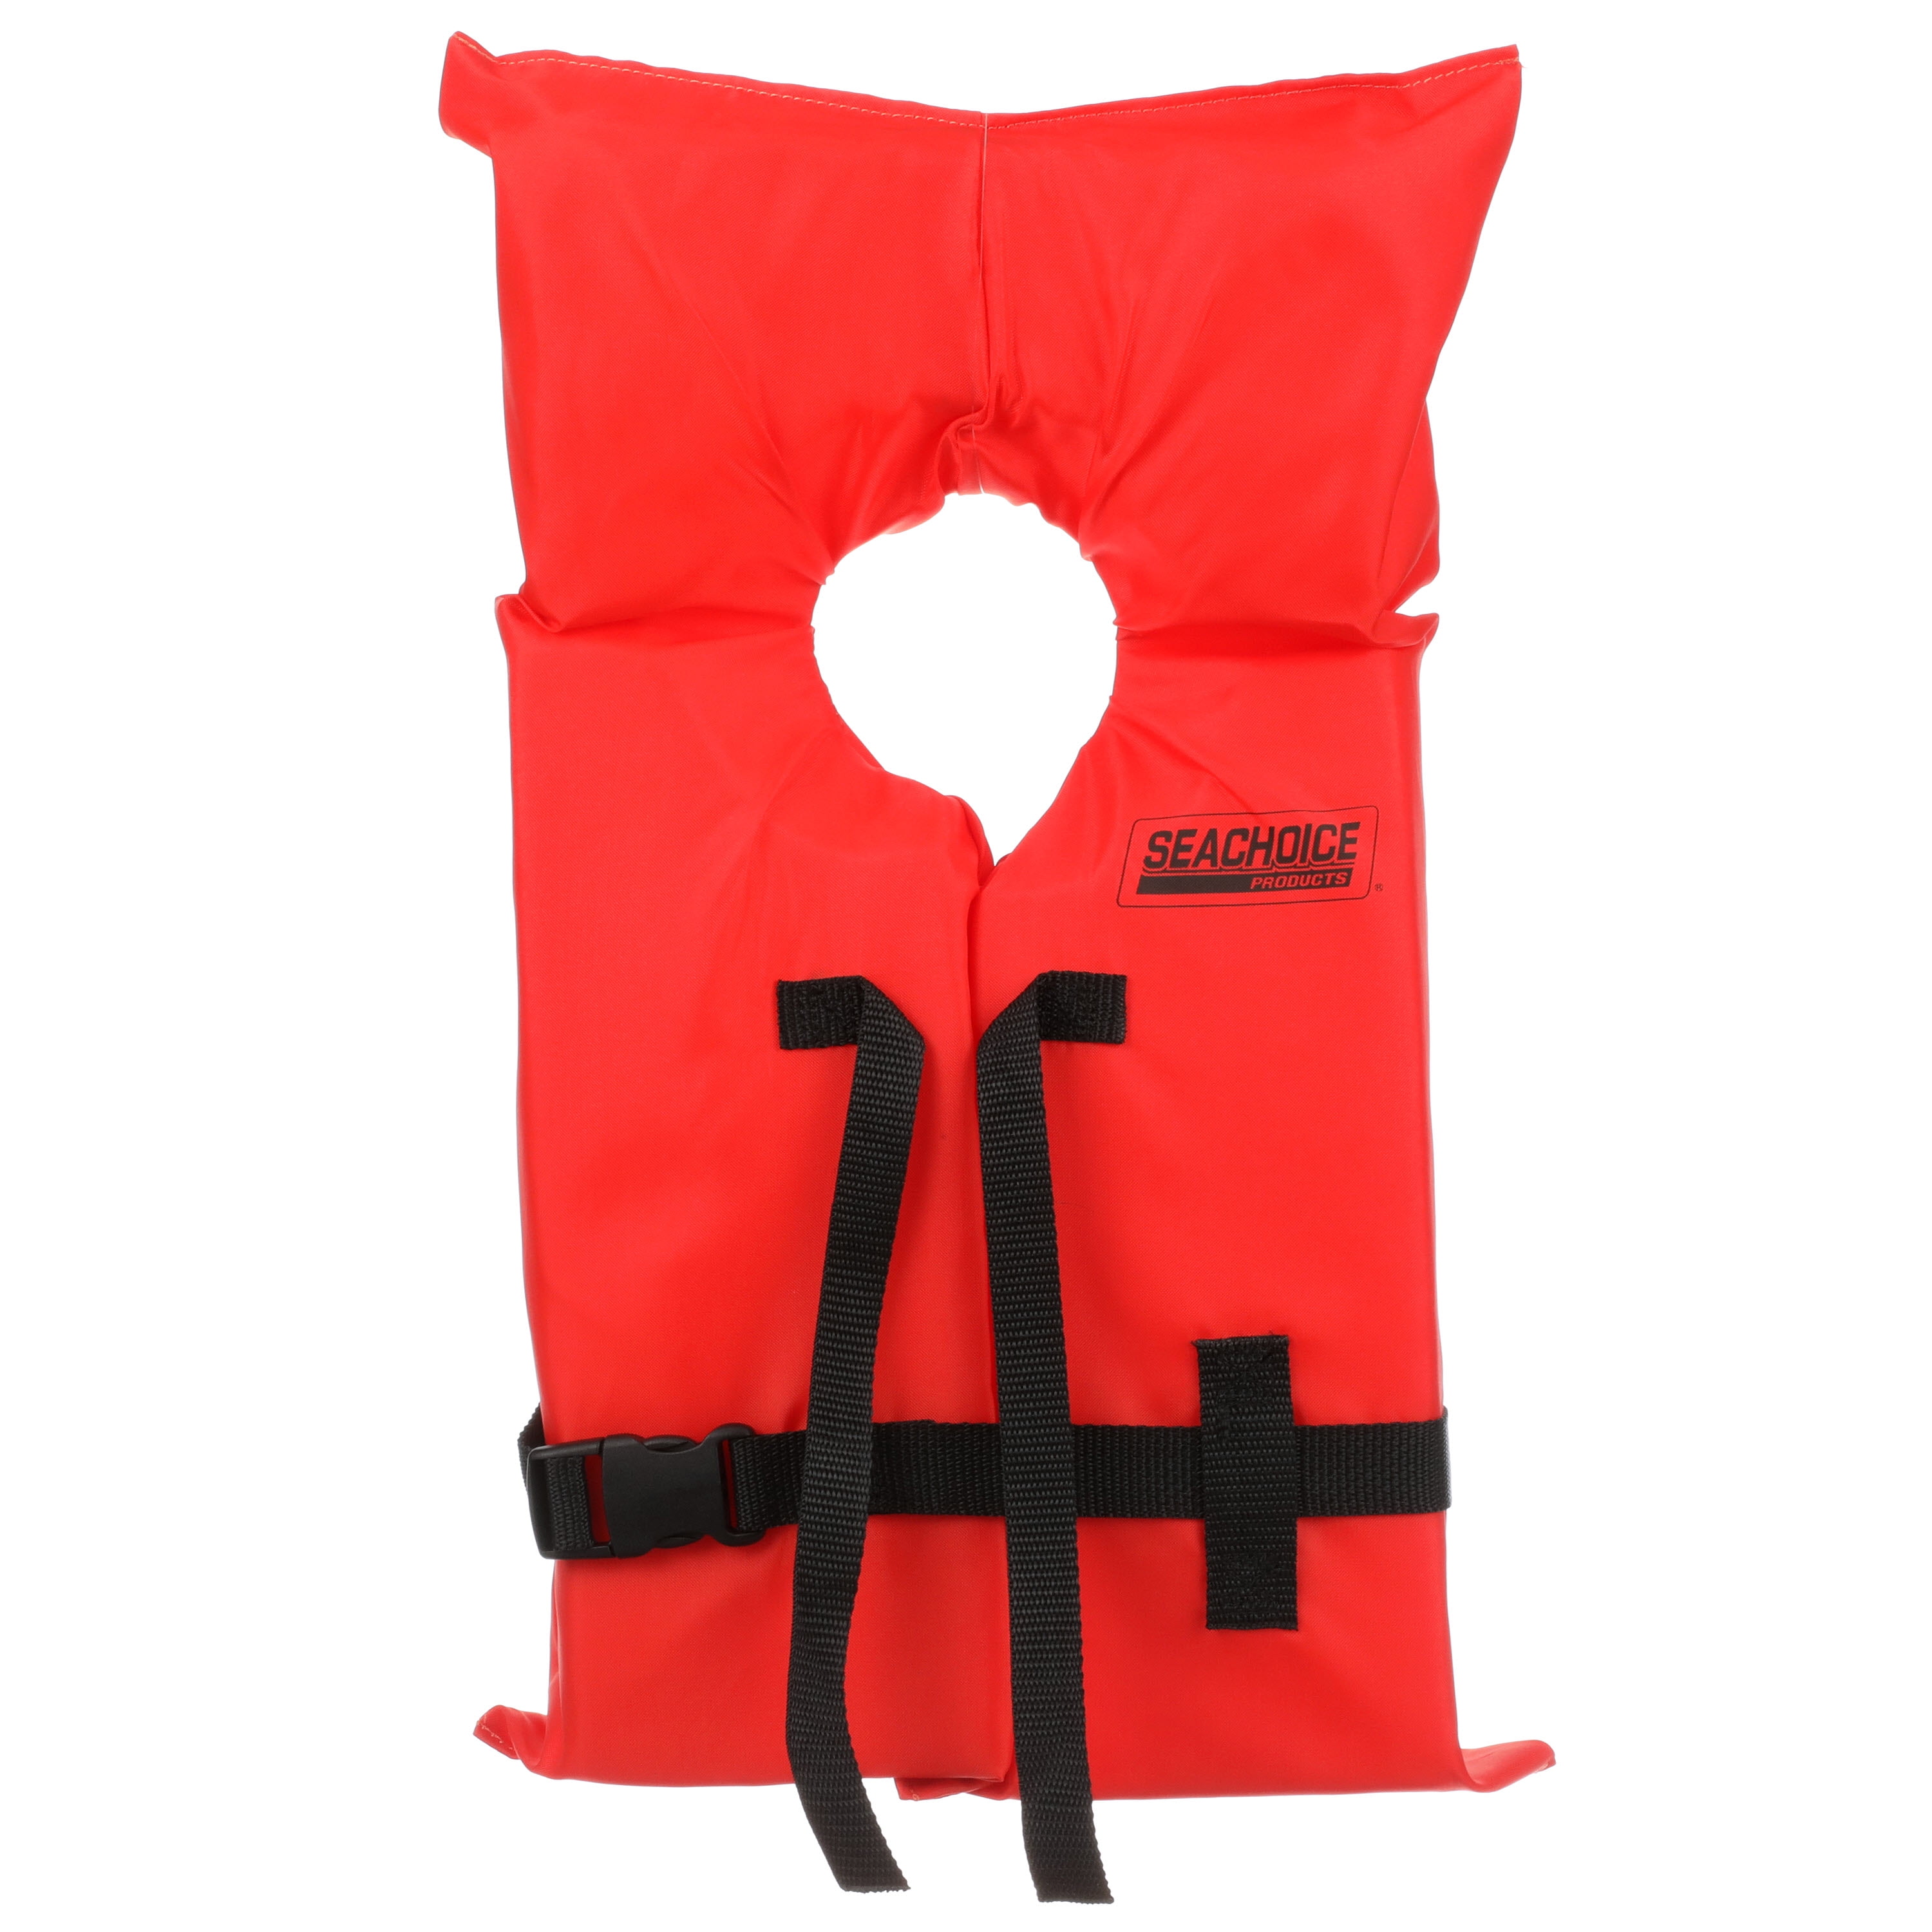 Lot Exxel Child 30-50 Lb Orange Life Jacket Type II PFD Coast Guard Approved 2 